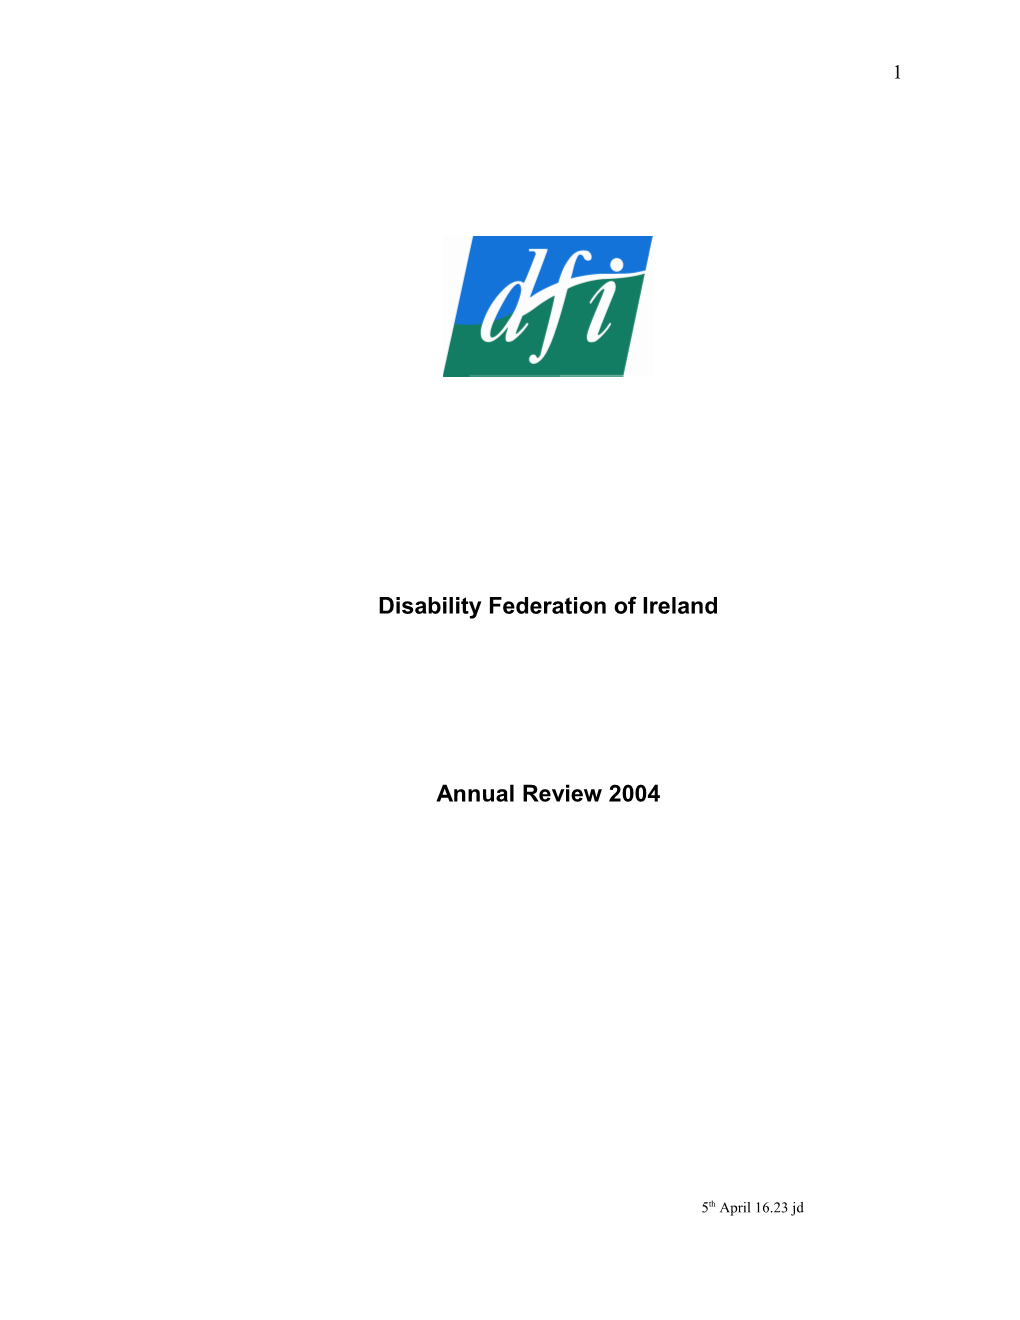 Draft Annual Report 2004